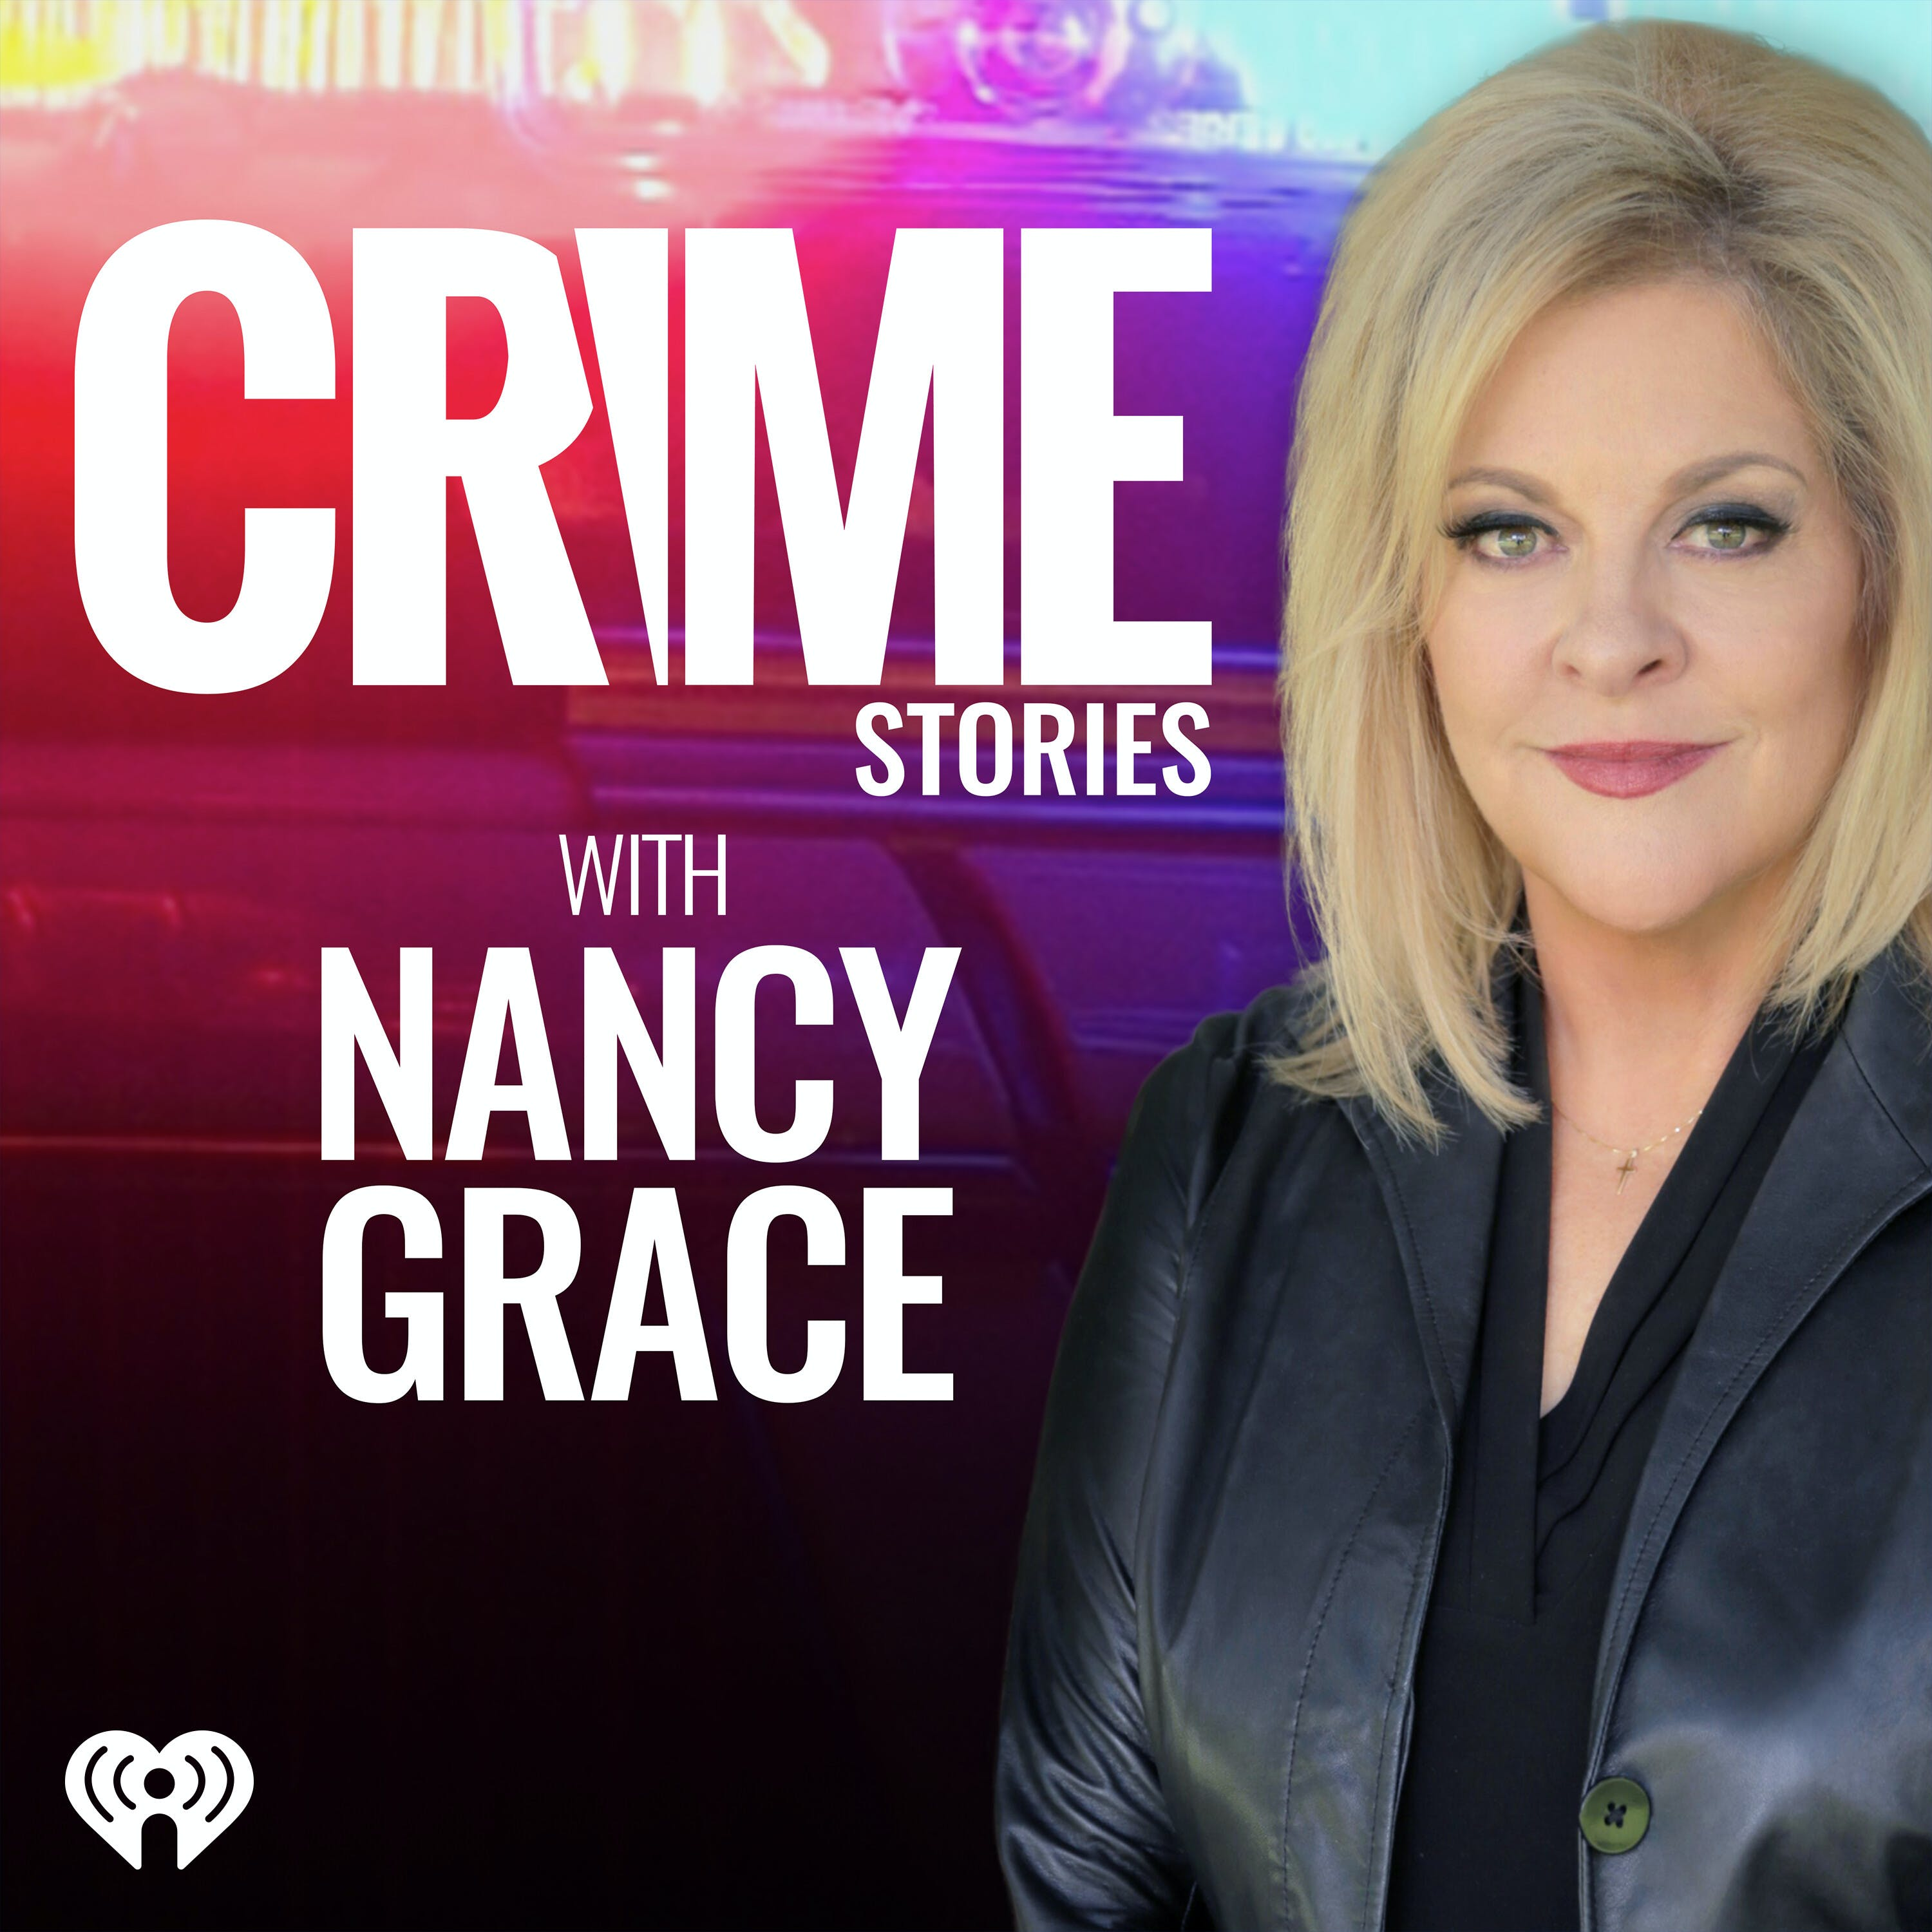 INJUSTICE WITH NANCY GRACE: Close Friend of Nancy Grace Suspected in Wife’s Murder